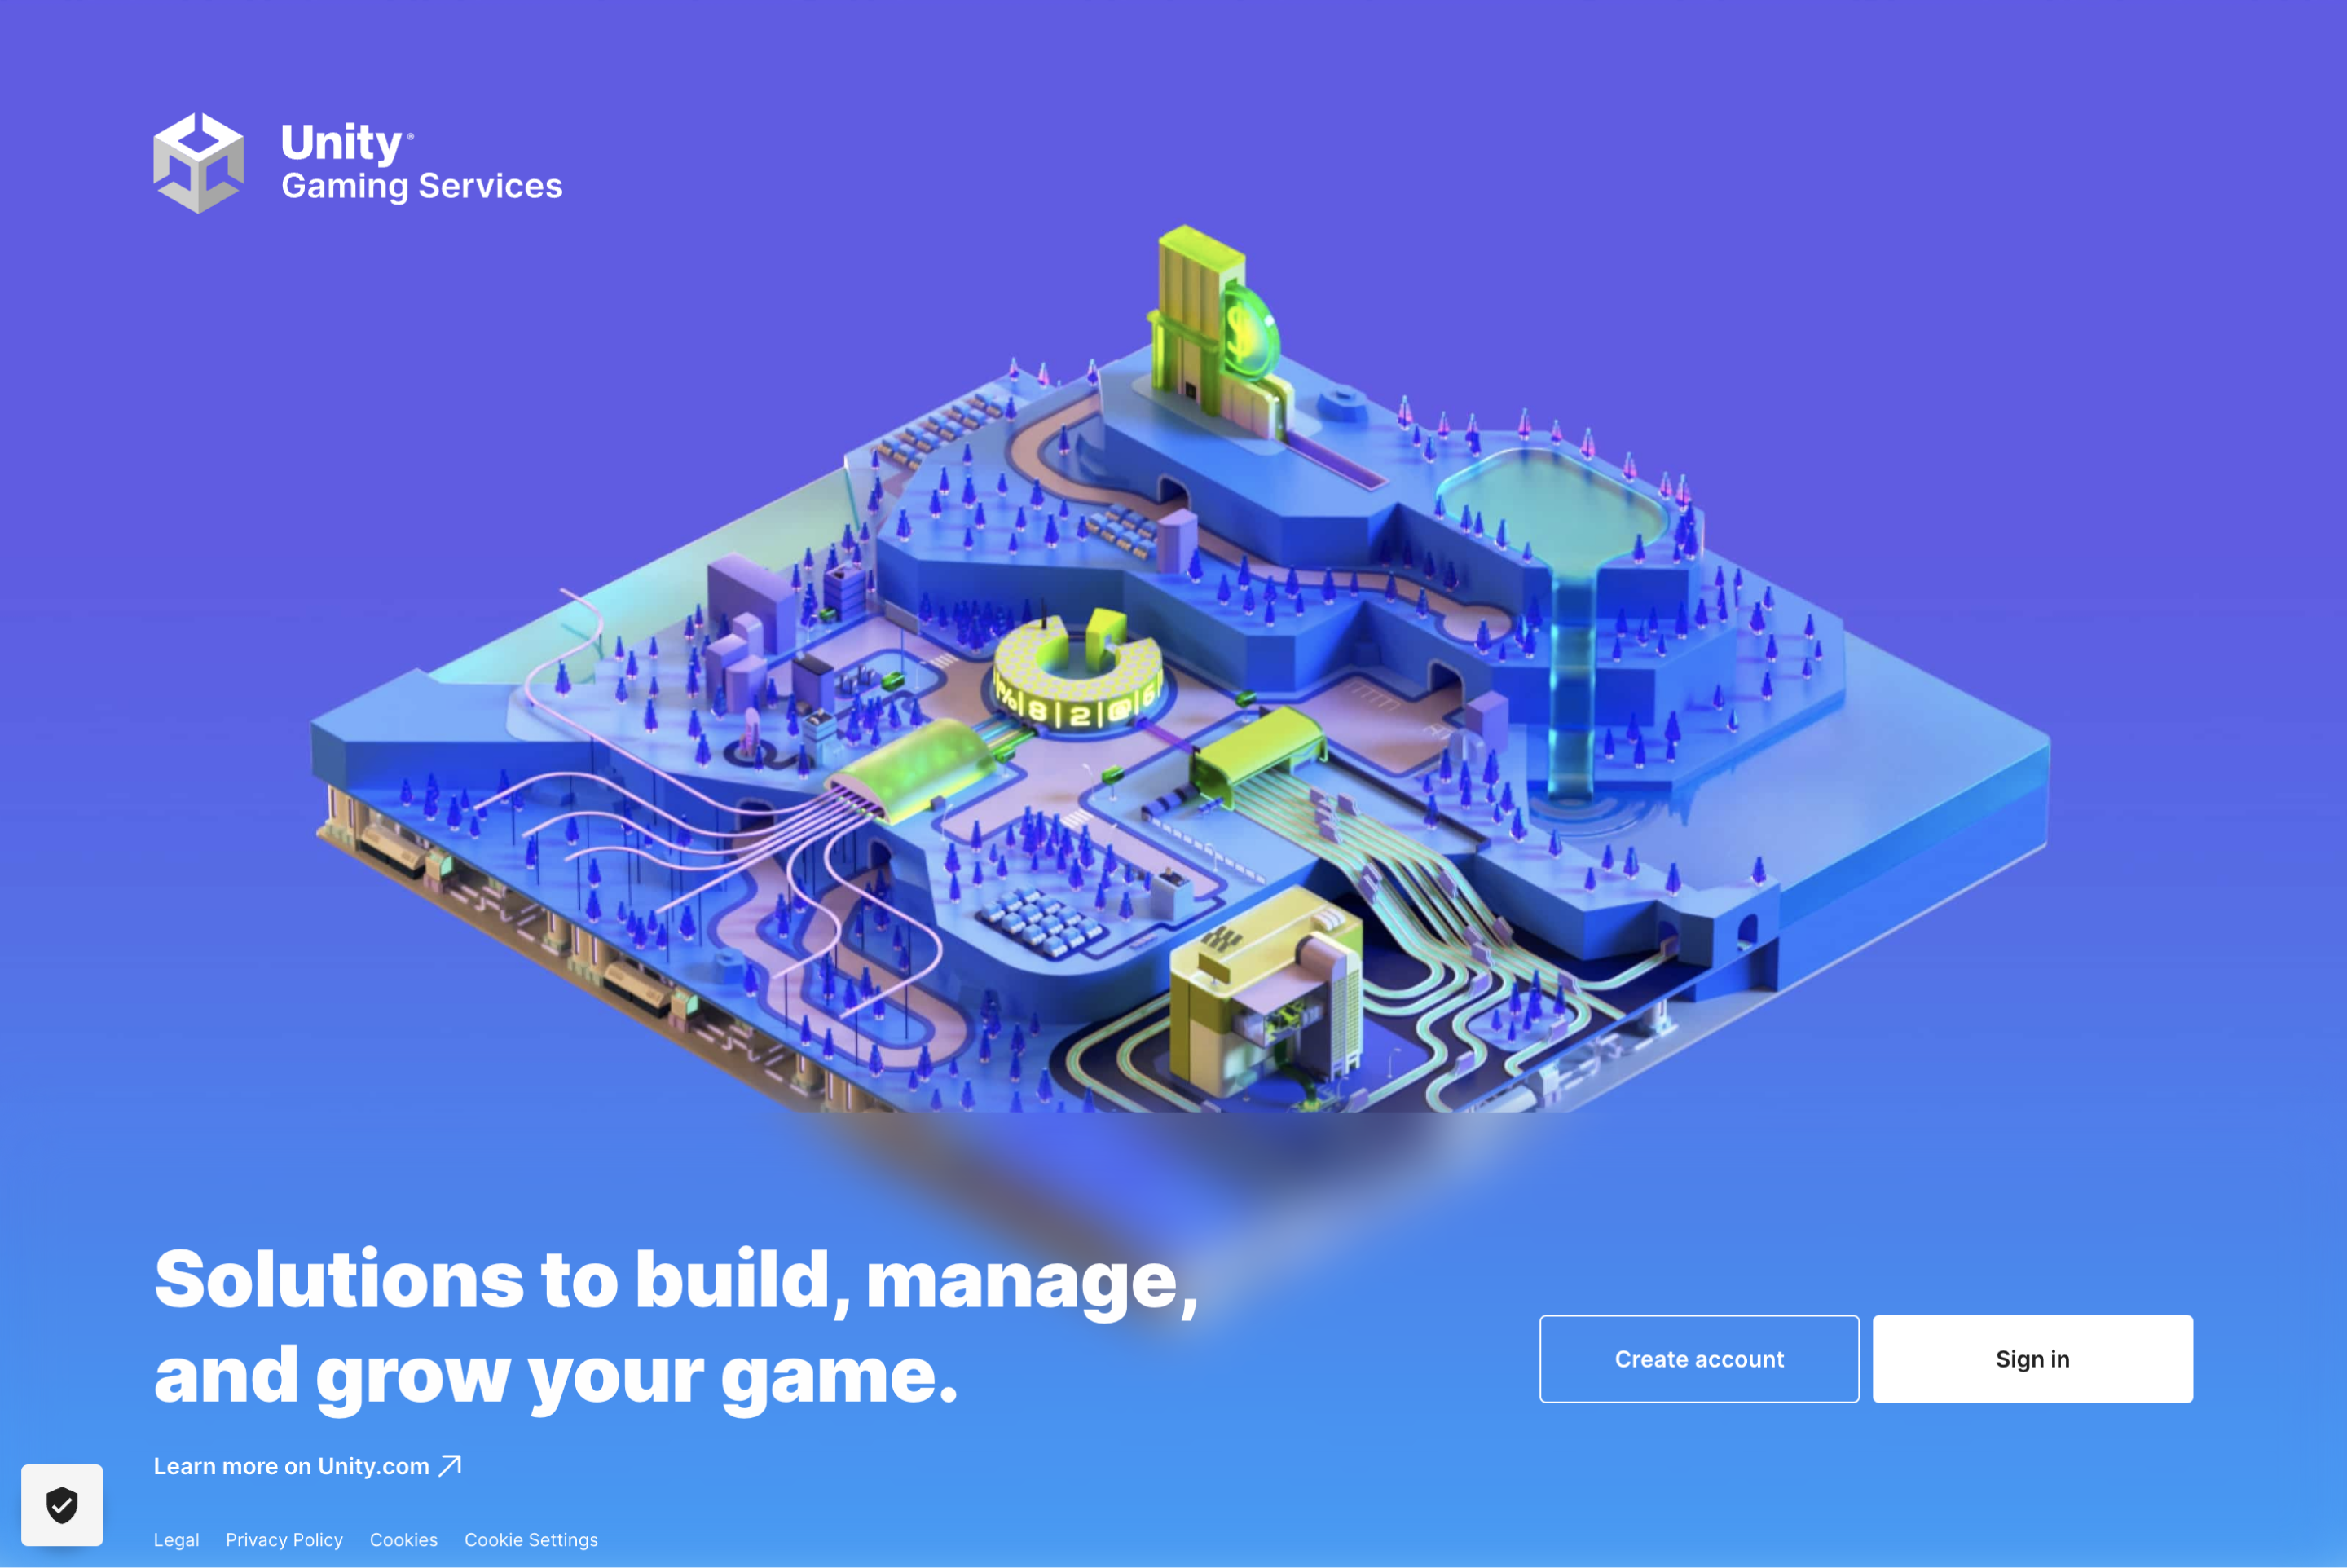 Game Development Design School / Homepage